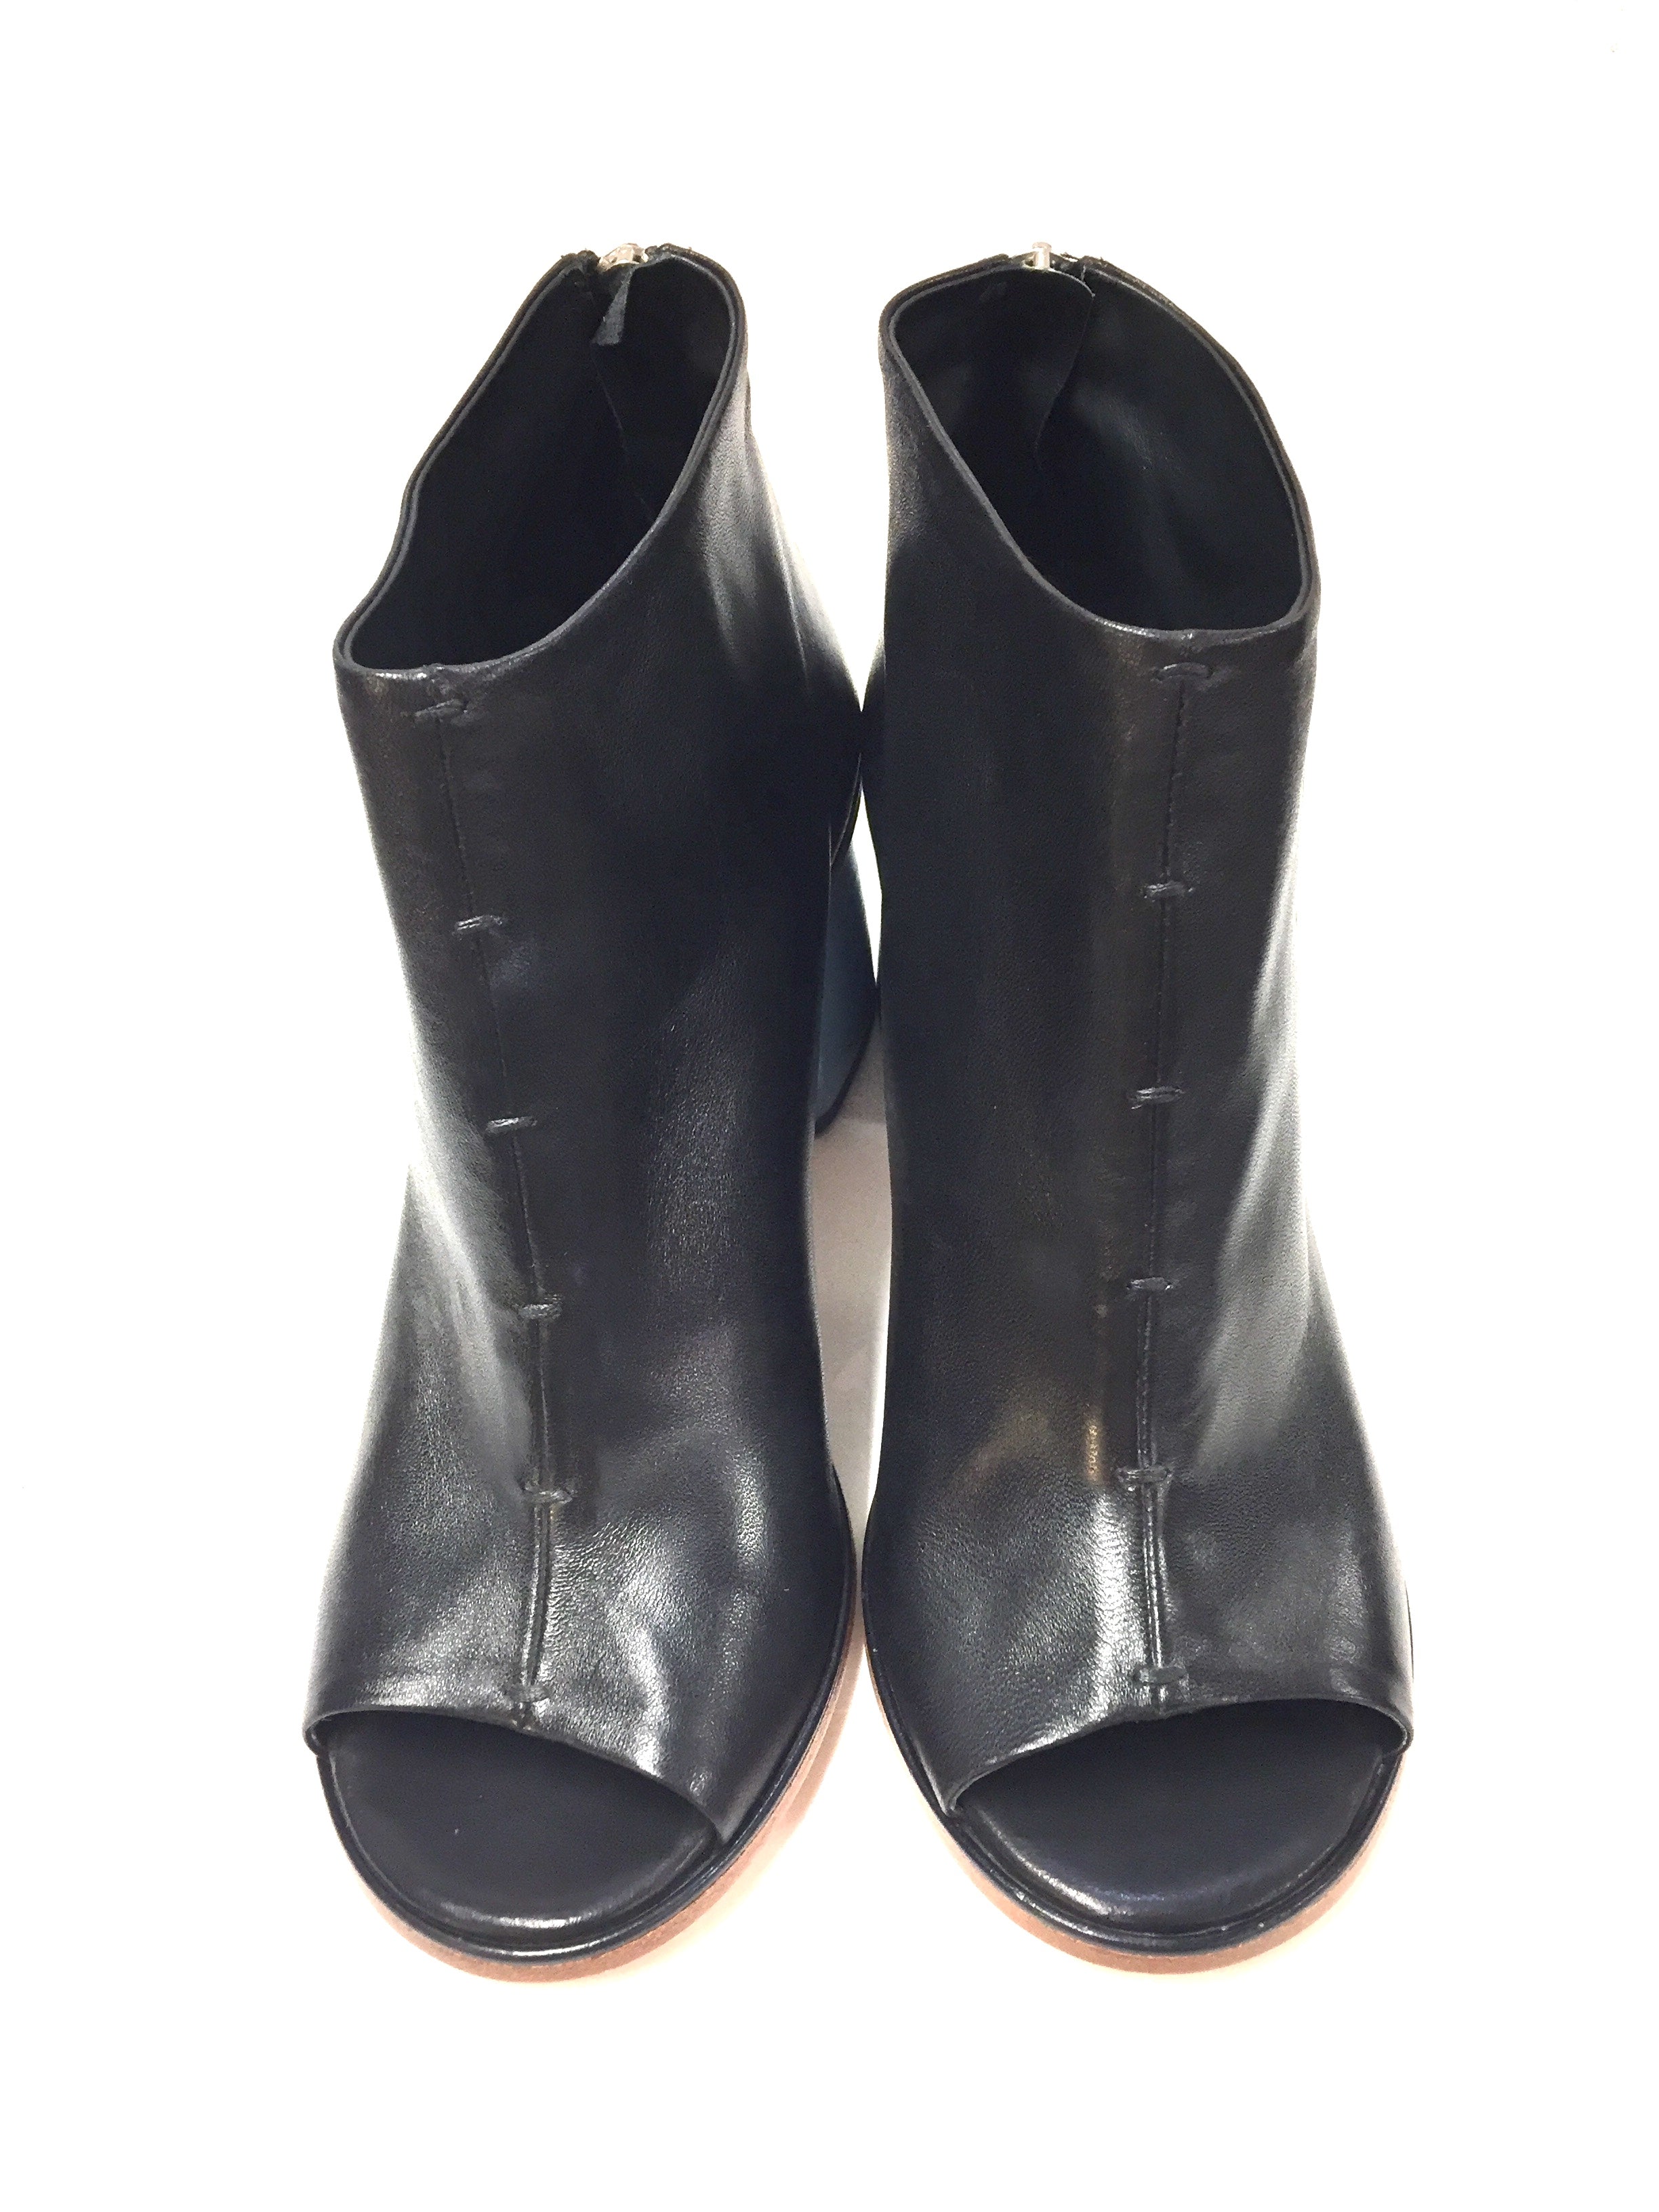 open toe black leather booties